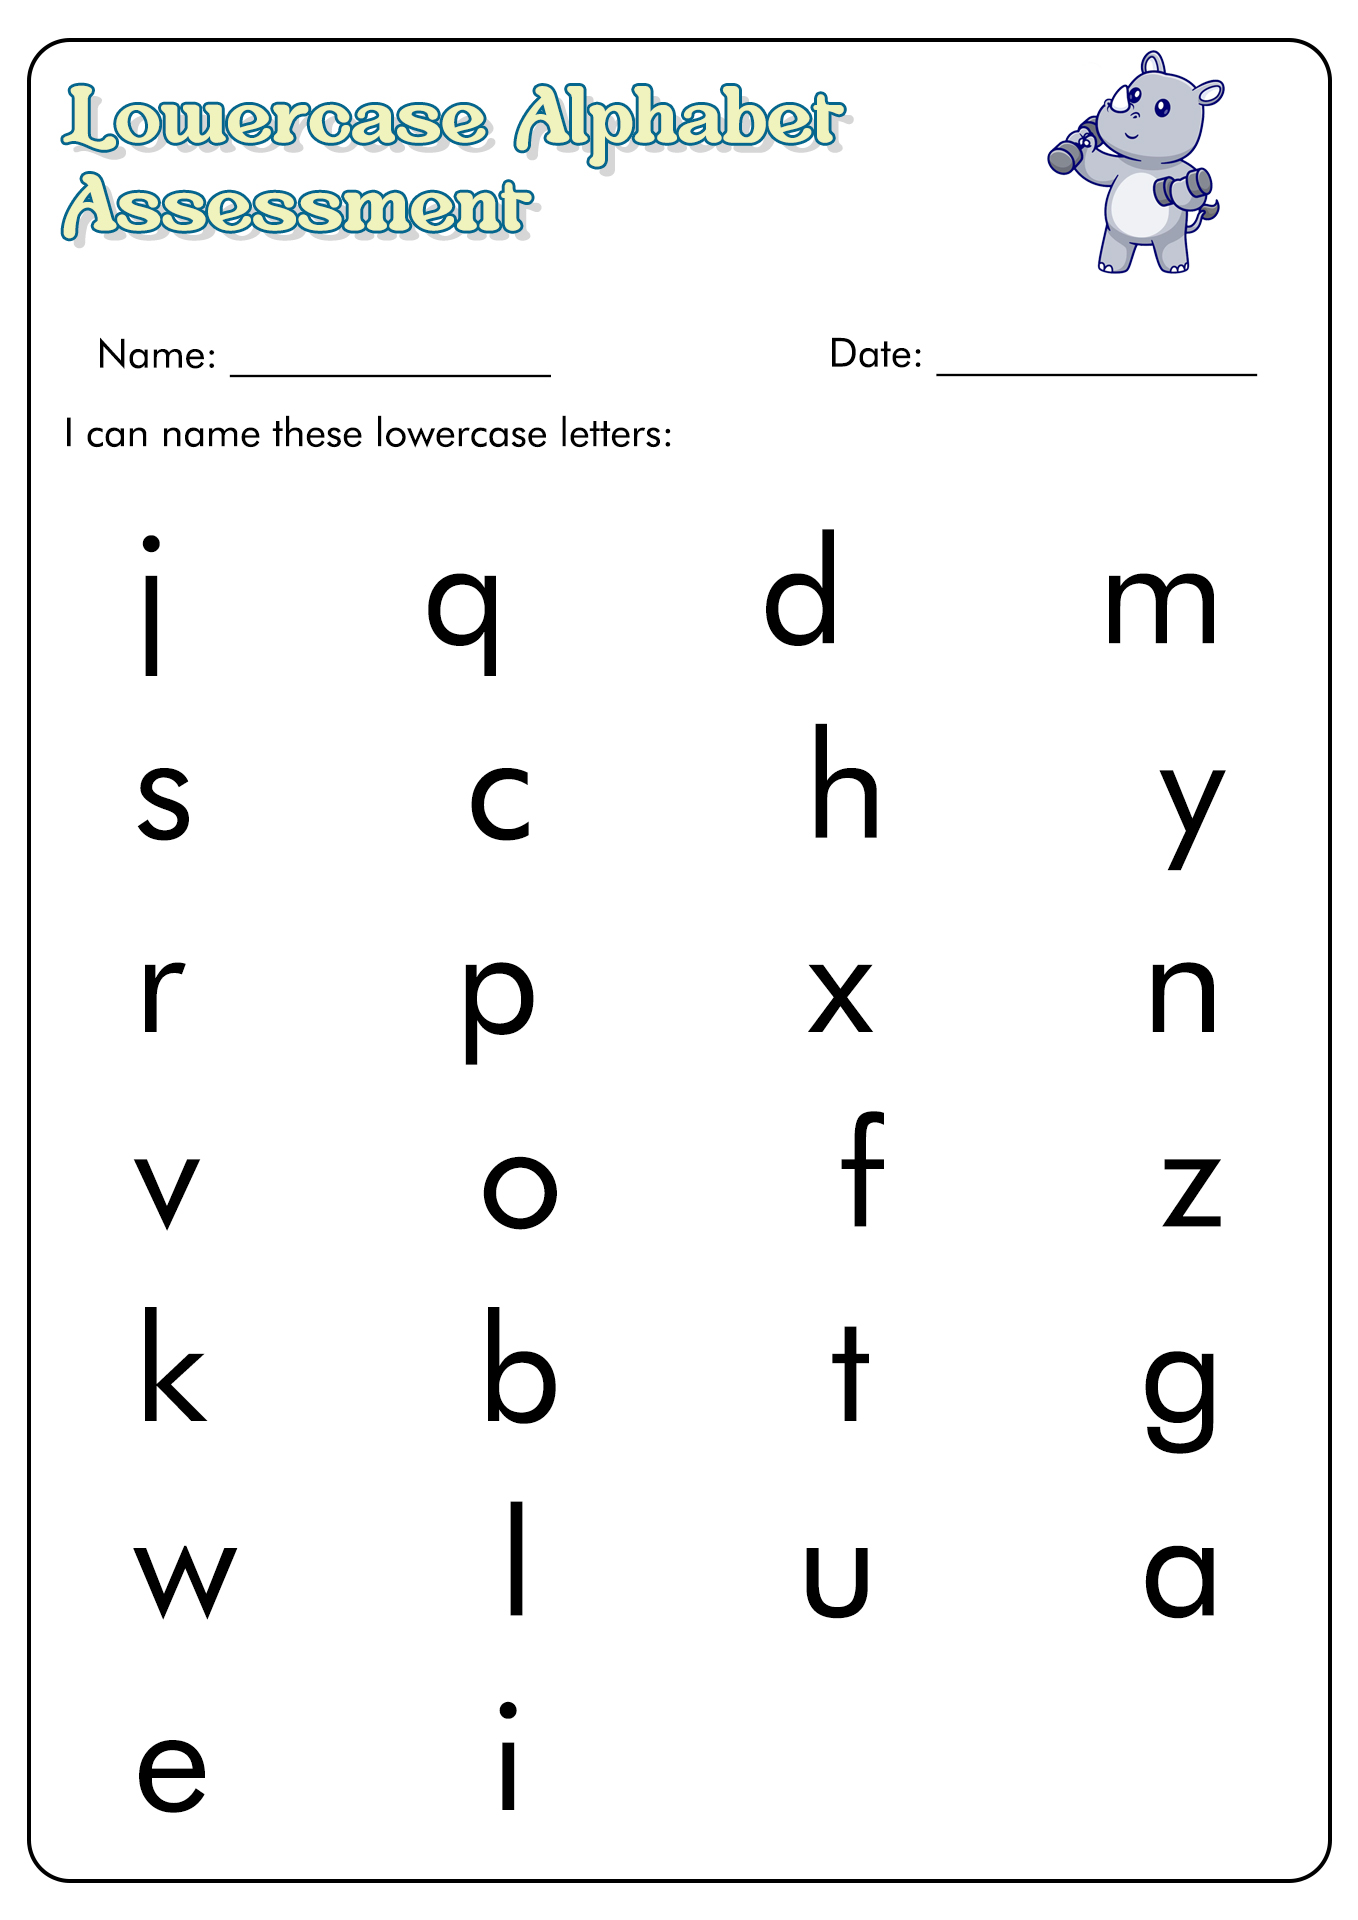 Lowercase Alphabet Letter Recognition Assessment